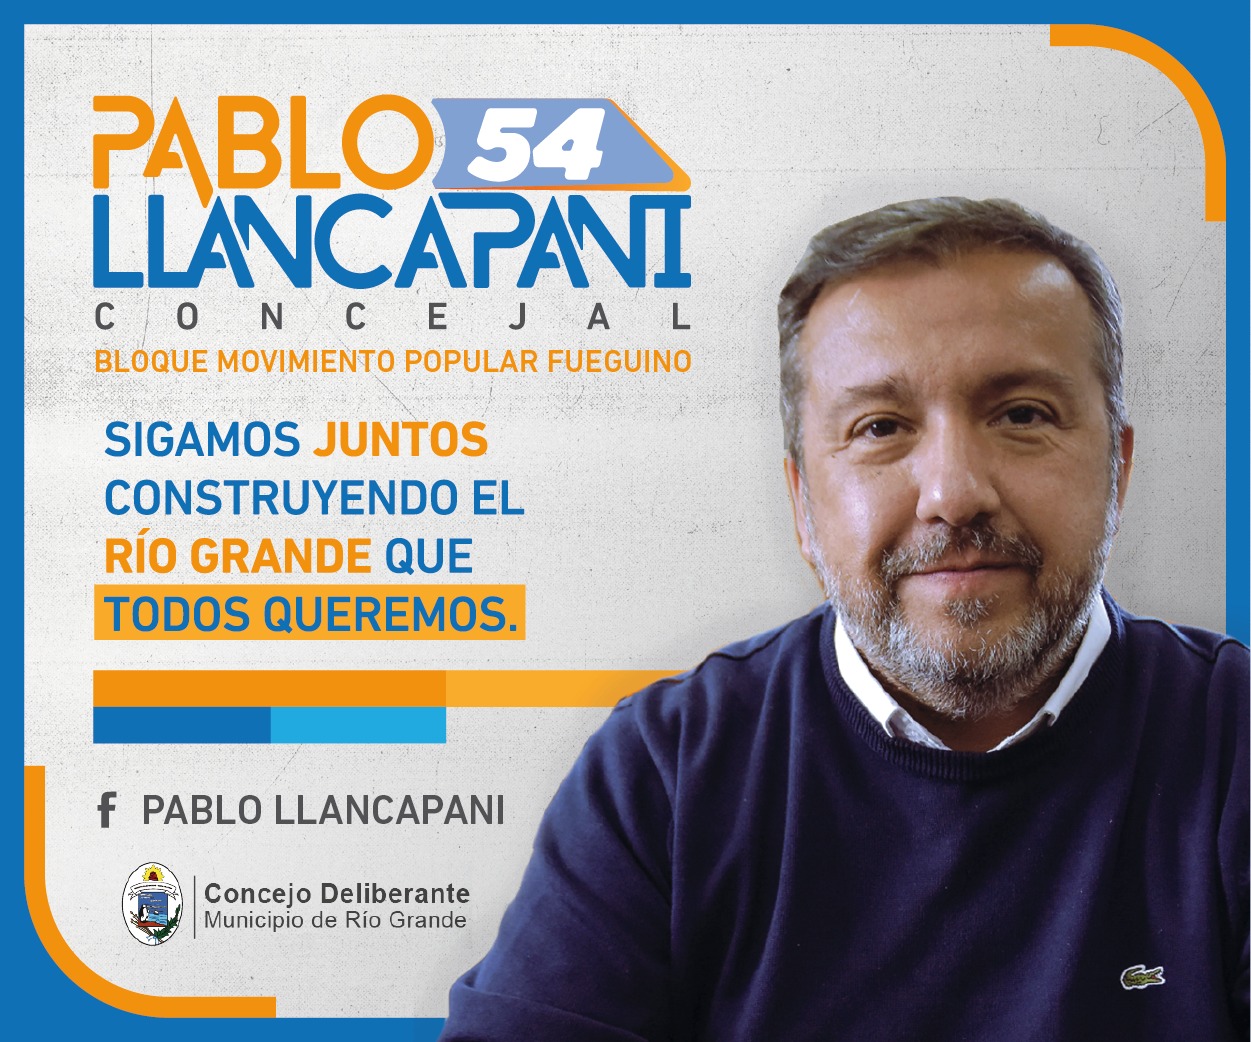 Pablo Llancapani